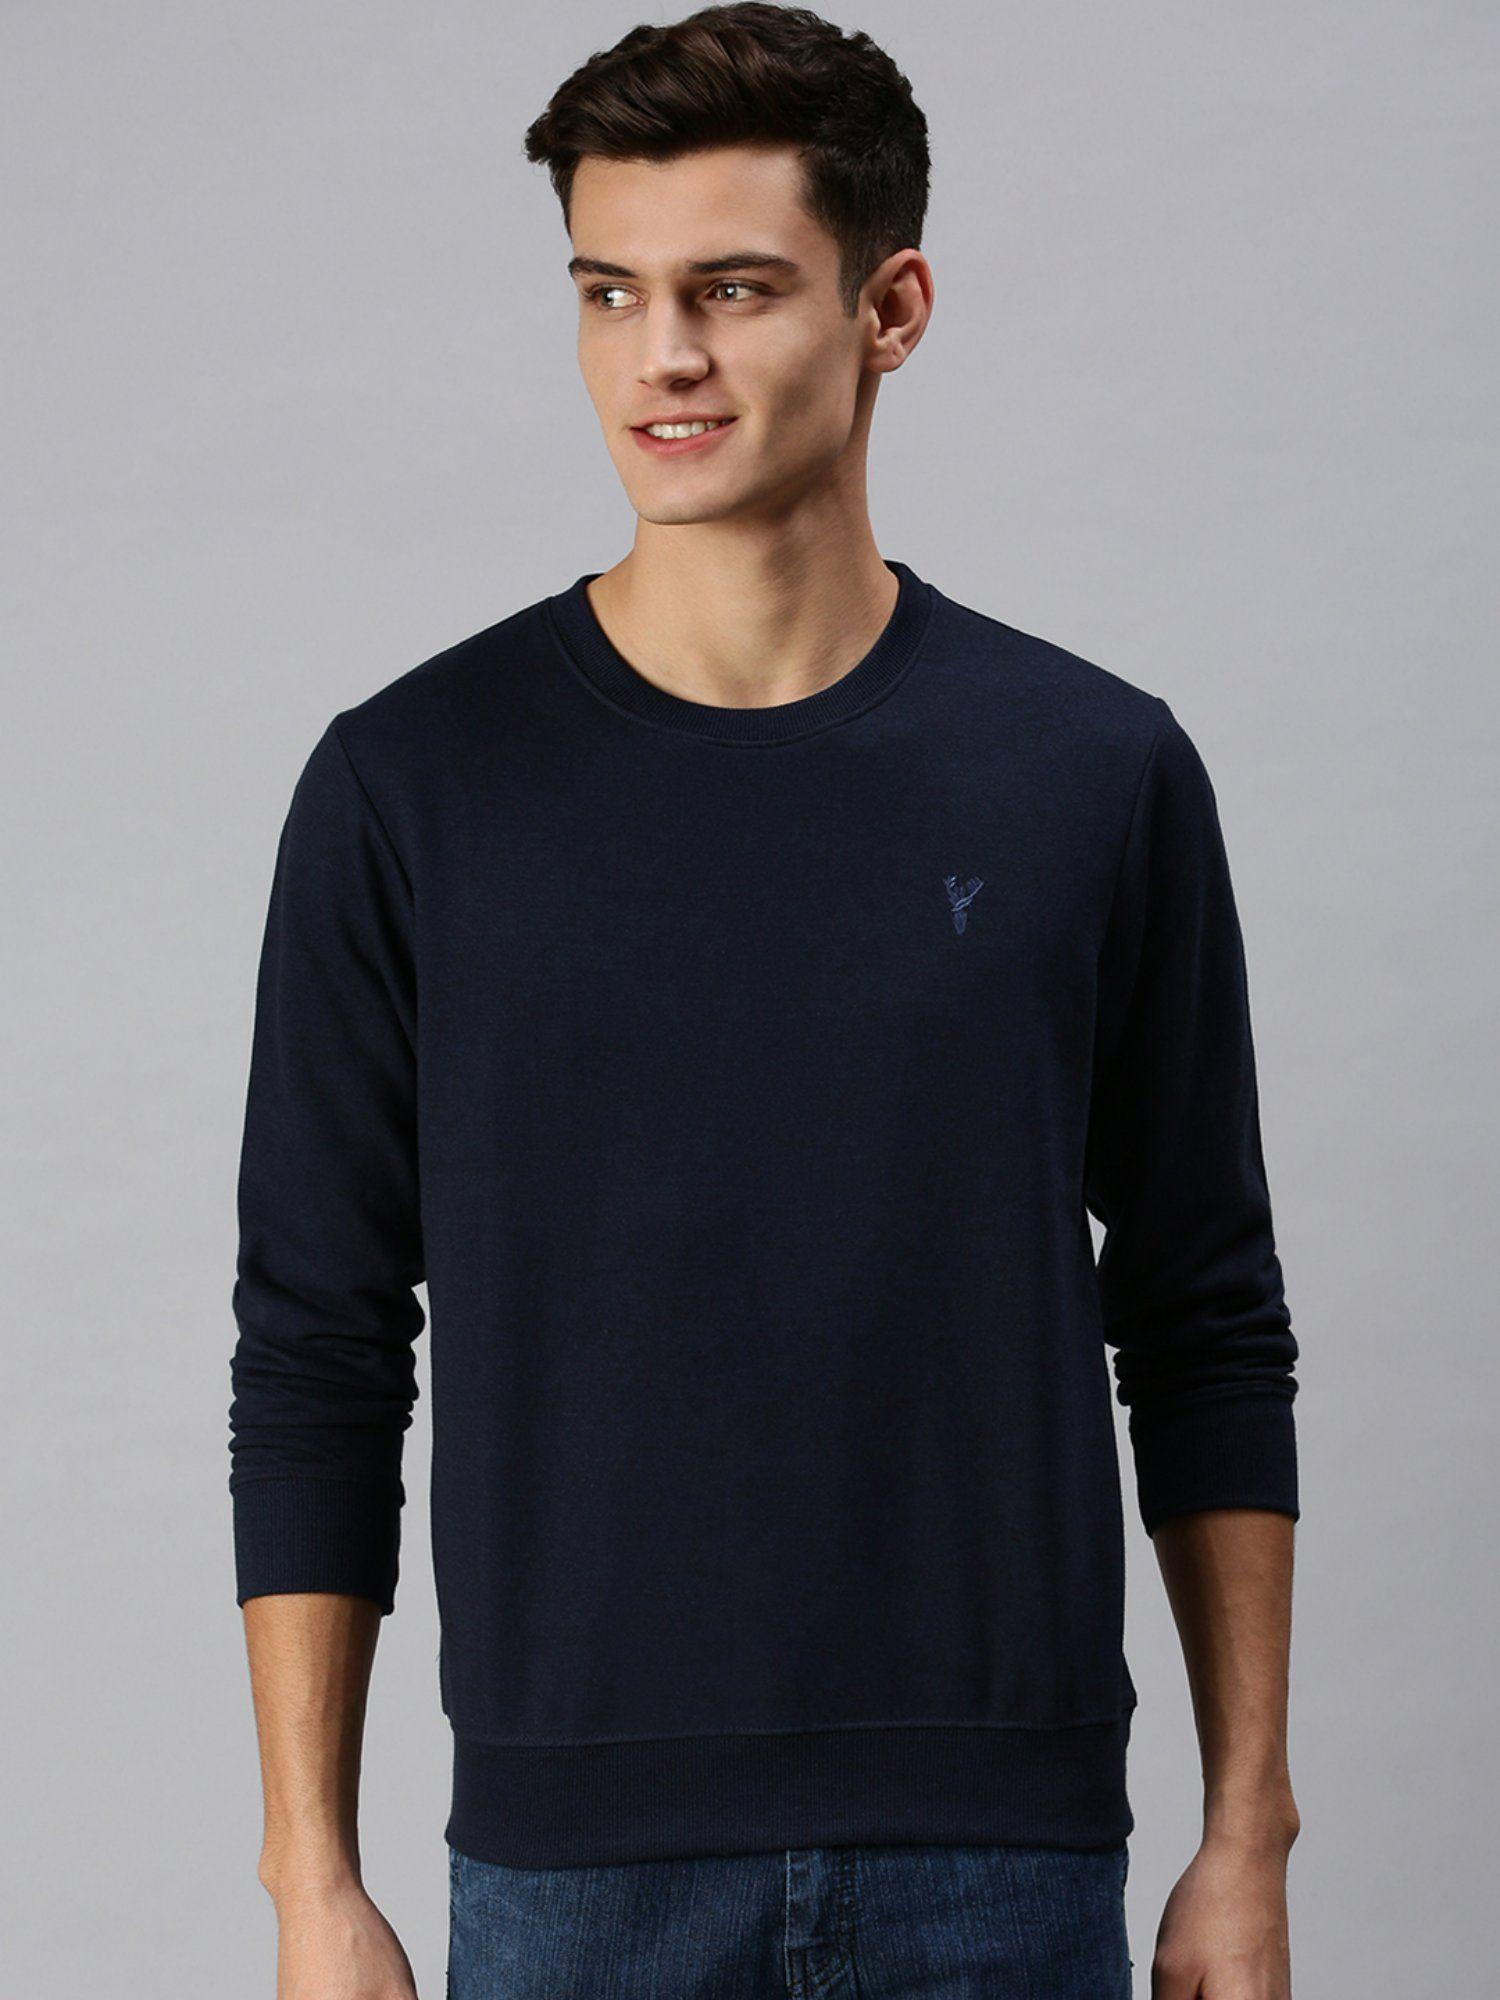 men-casual-cotton-pullover-navy-blue-sweatshirt